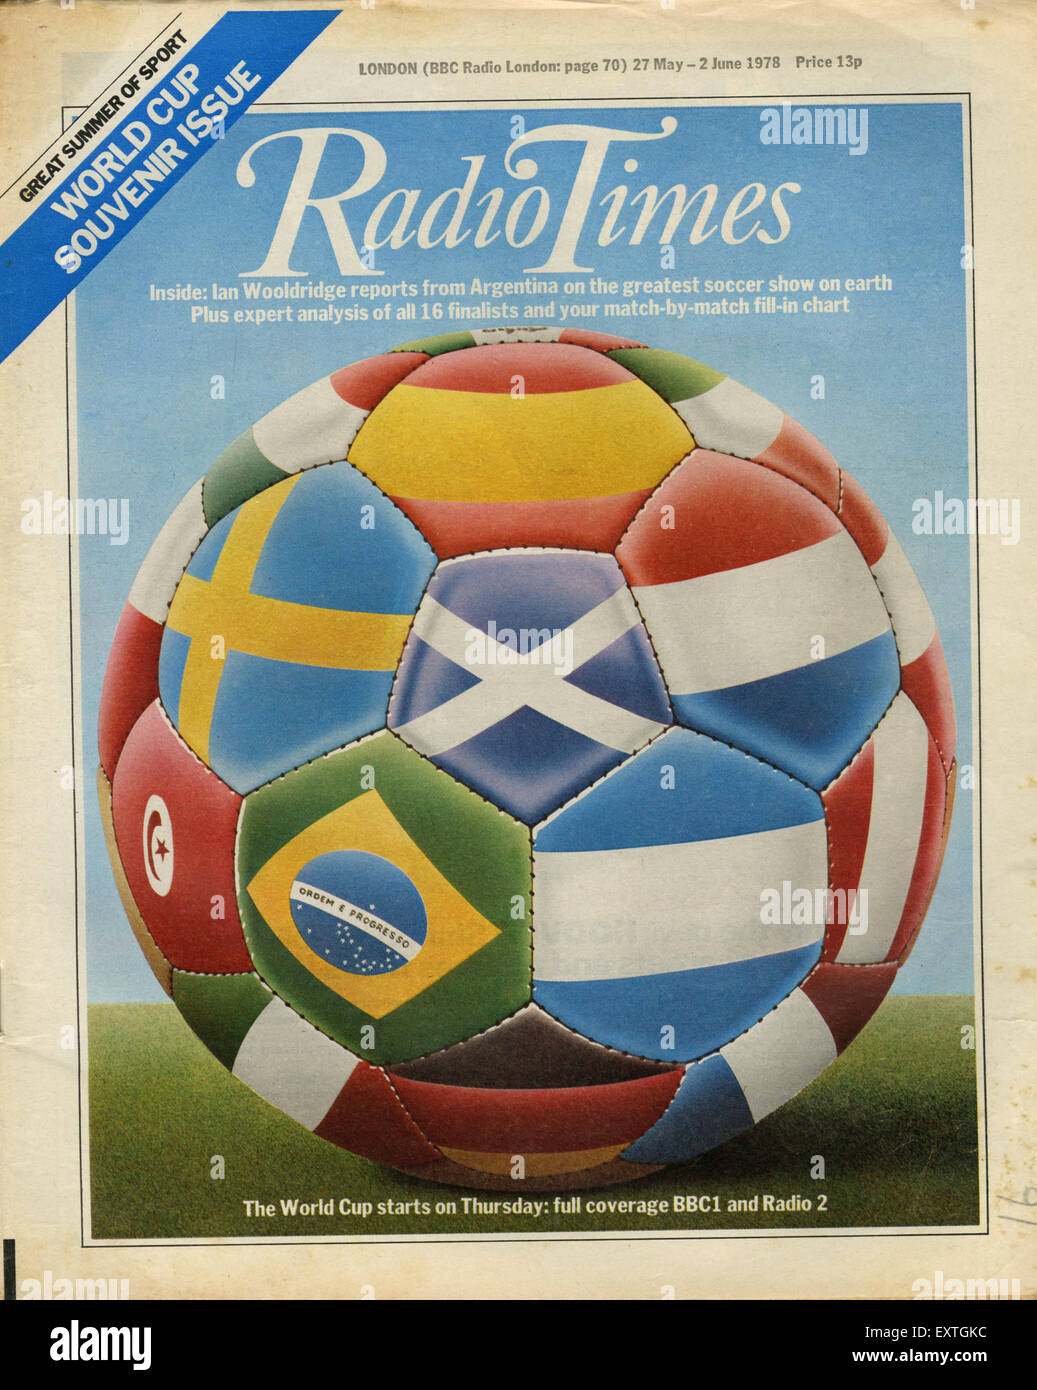 1970s UK Radio Times Magazine Cover Stock Photo - Alamy